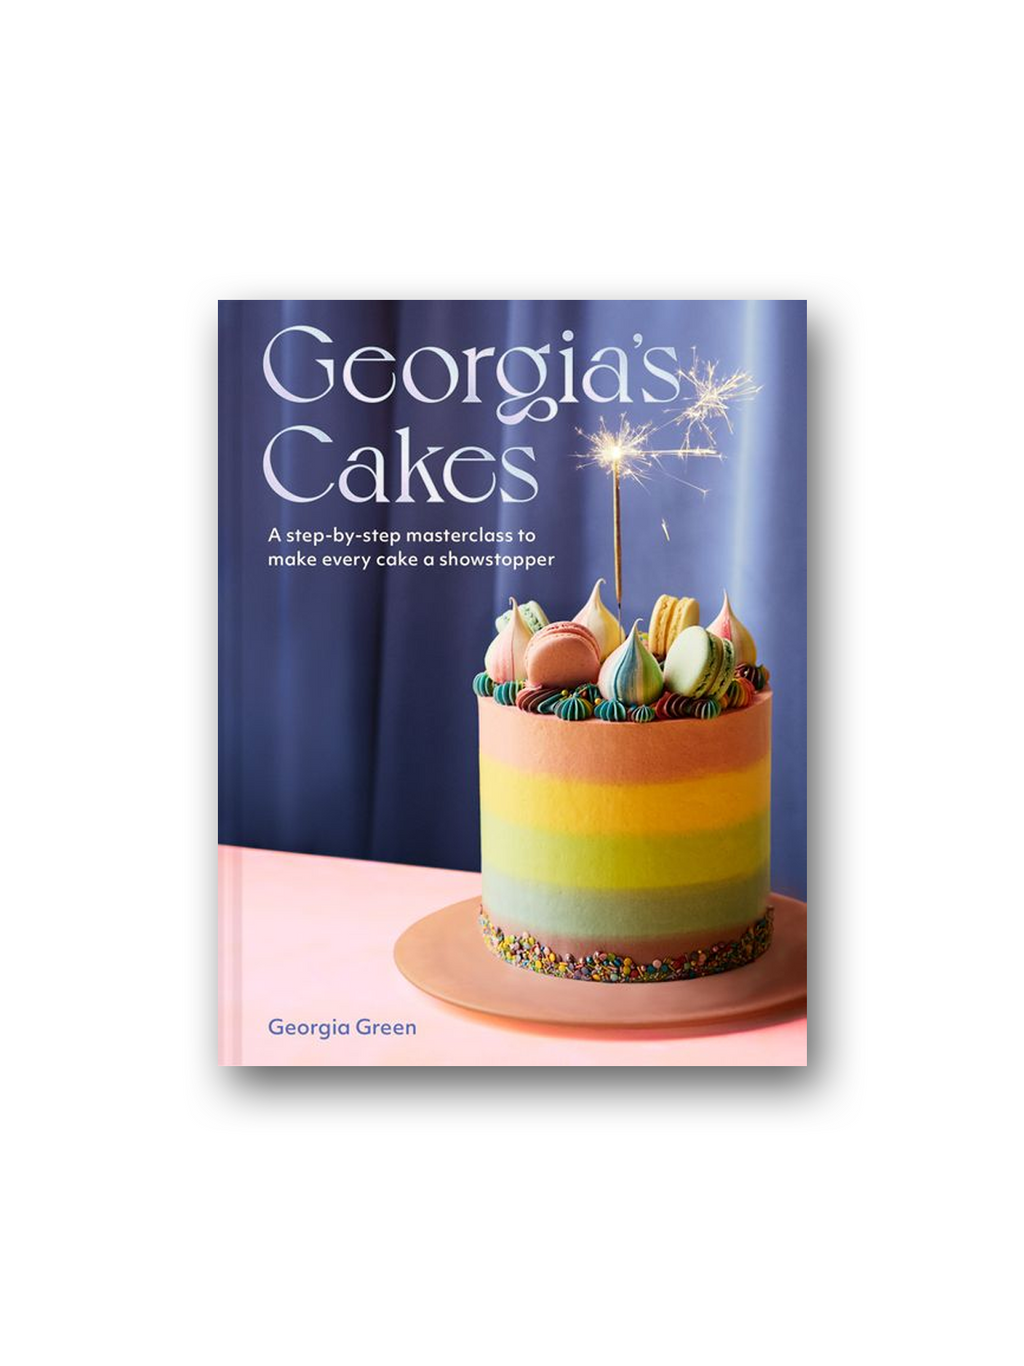 Georgia’s Cakes